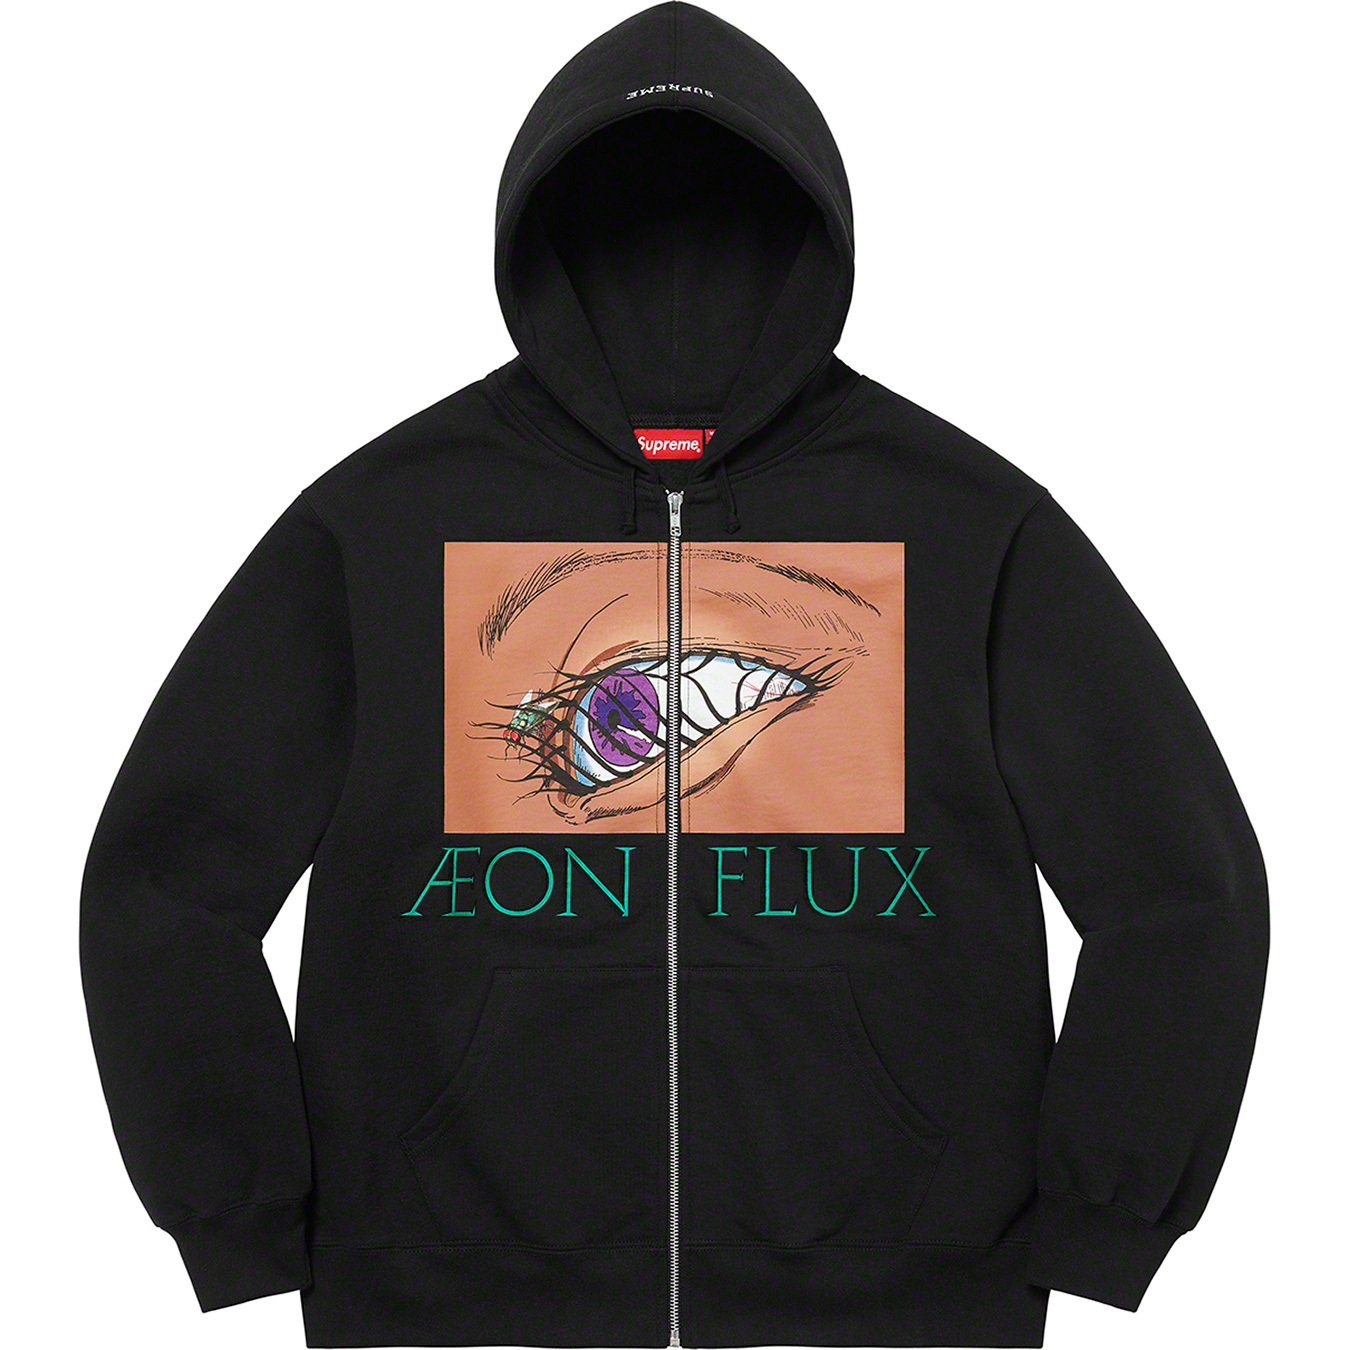 Aeon Flux Zip Up Hooded Sweatshirt - Supreme Community